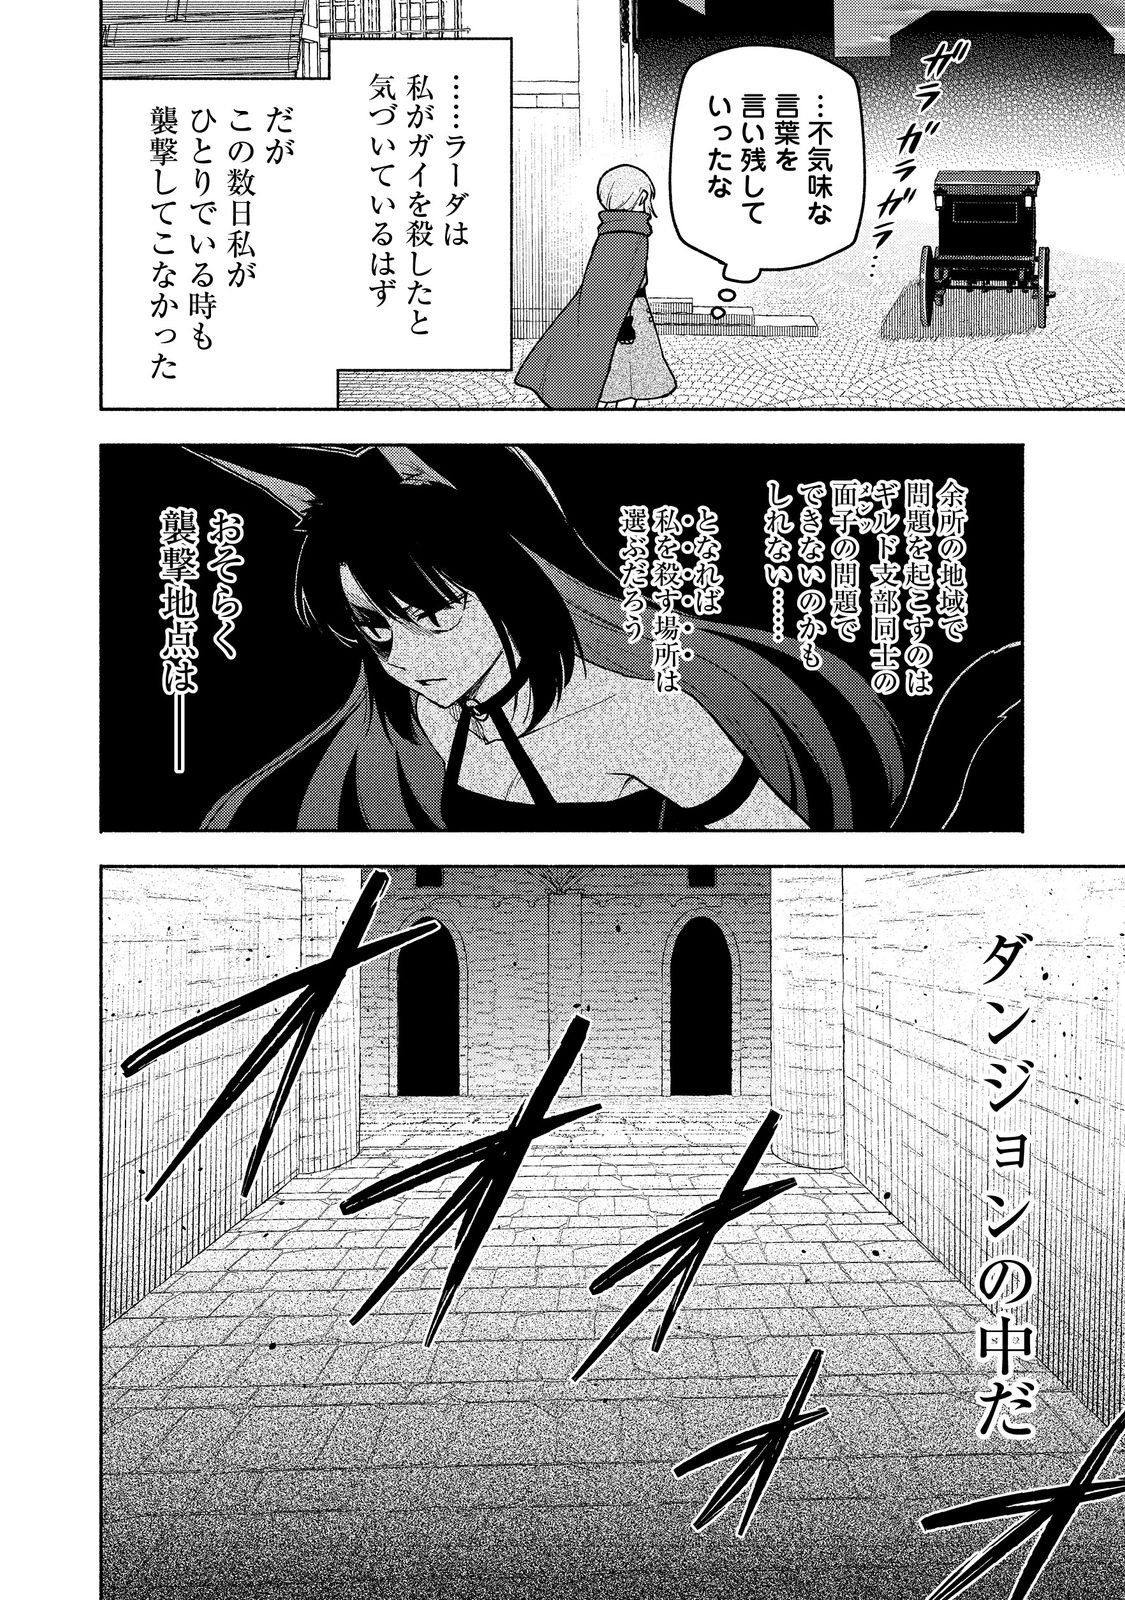 Otome Game no Heroine de Saikyou Survival - Chapter 23 - Page 20